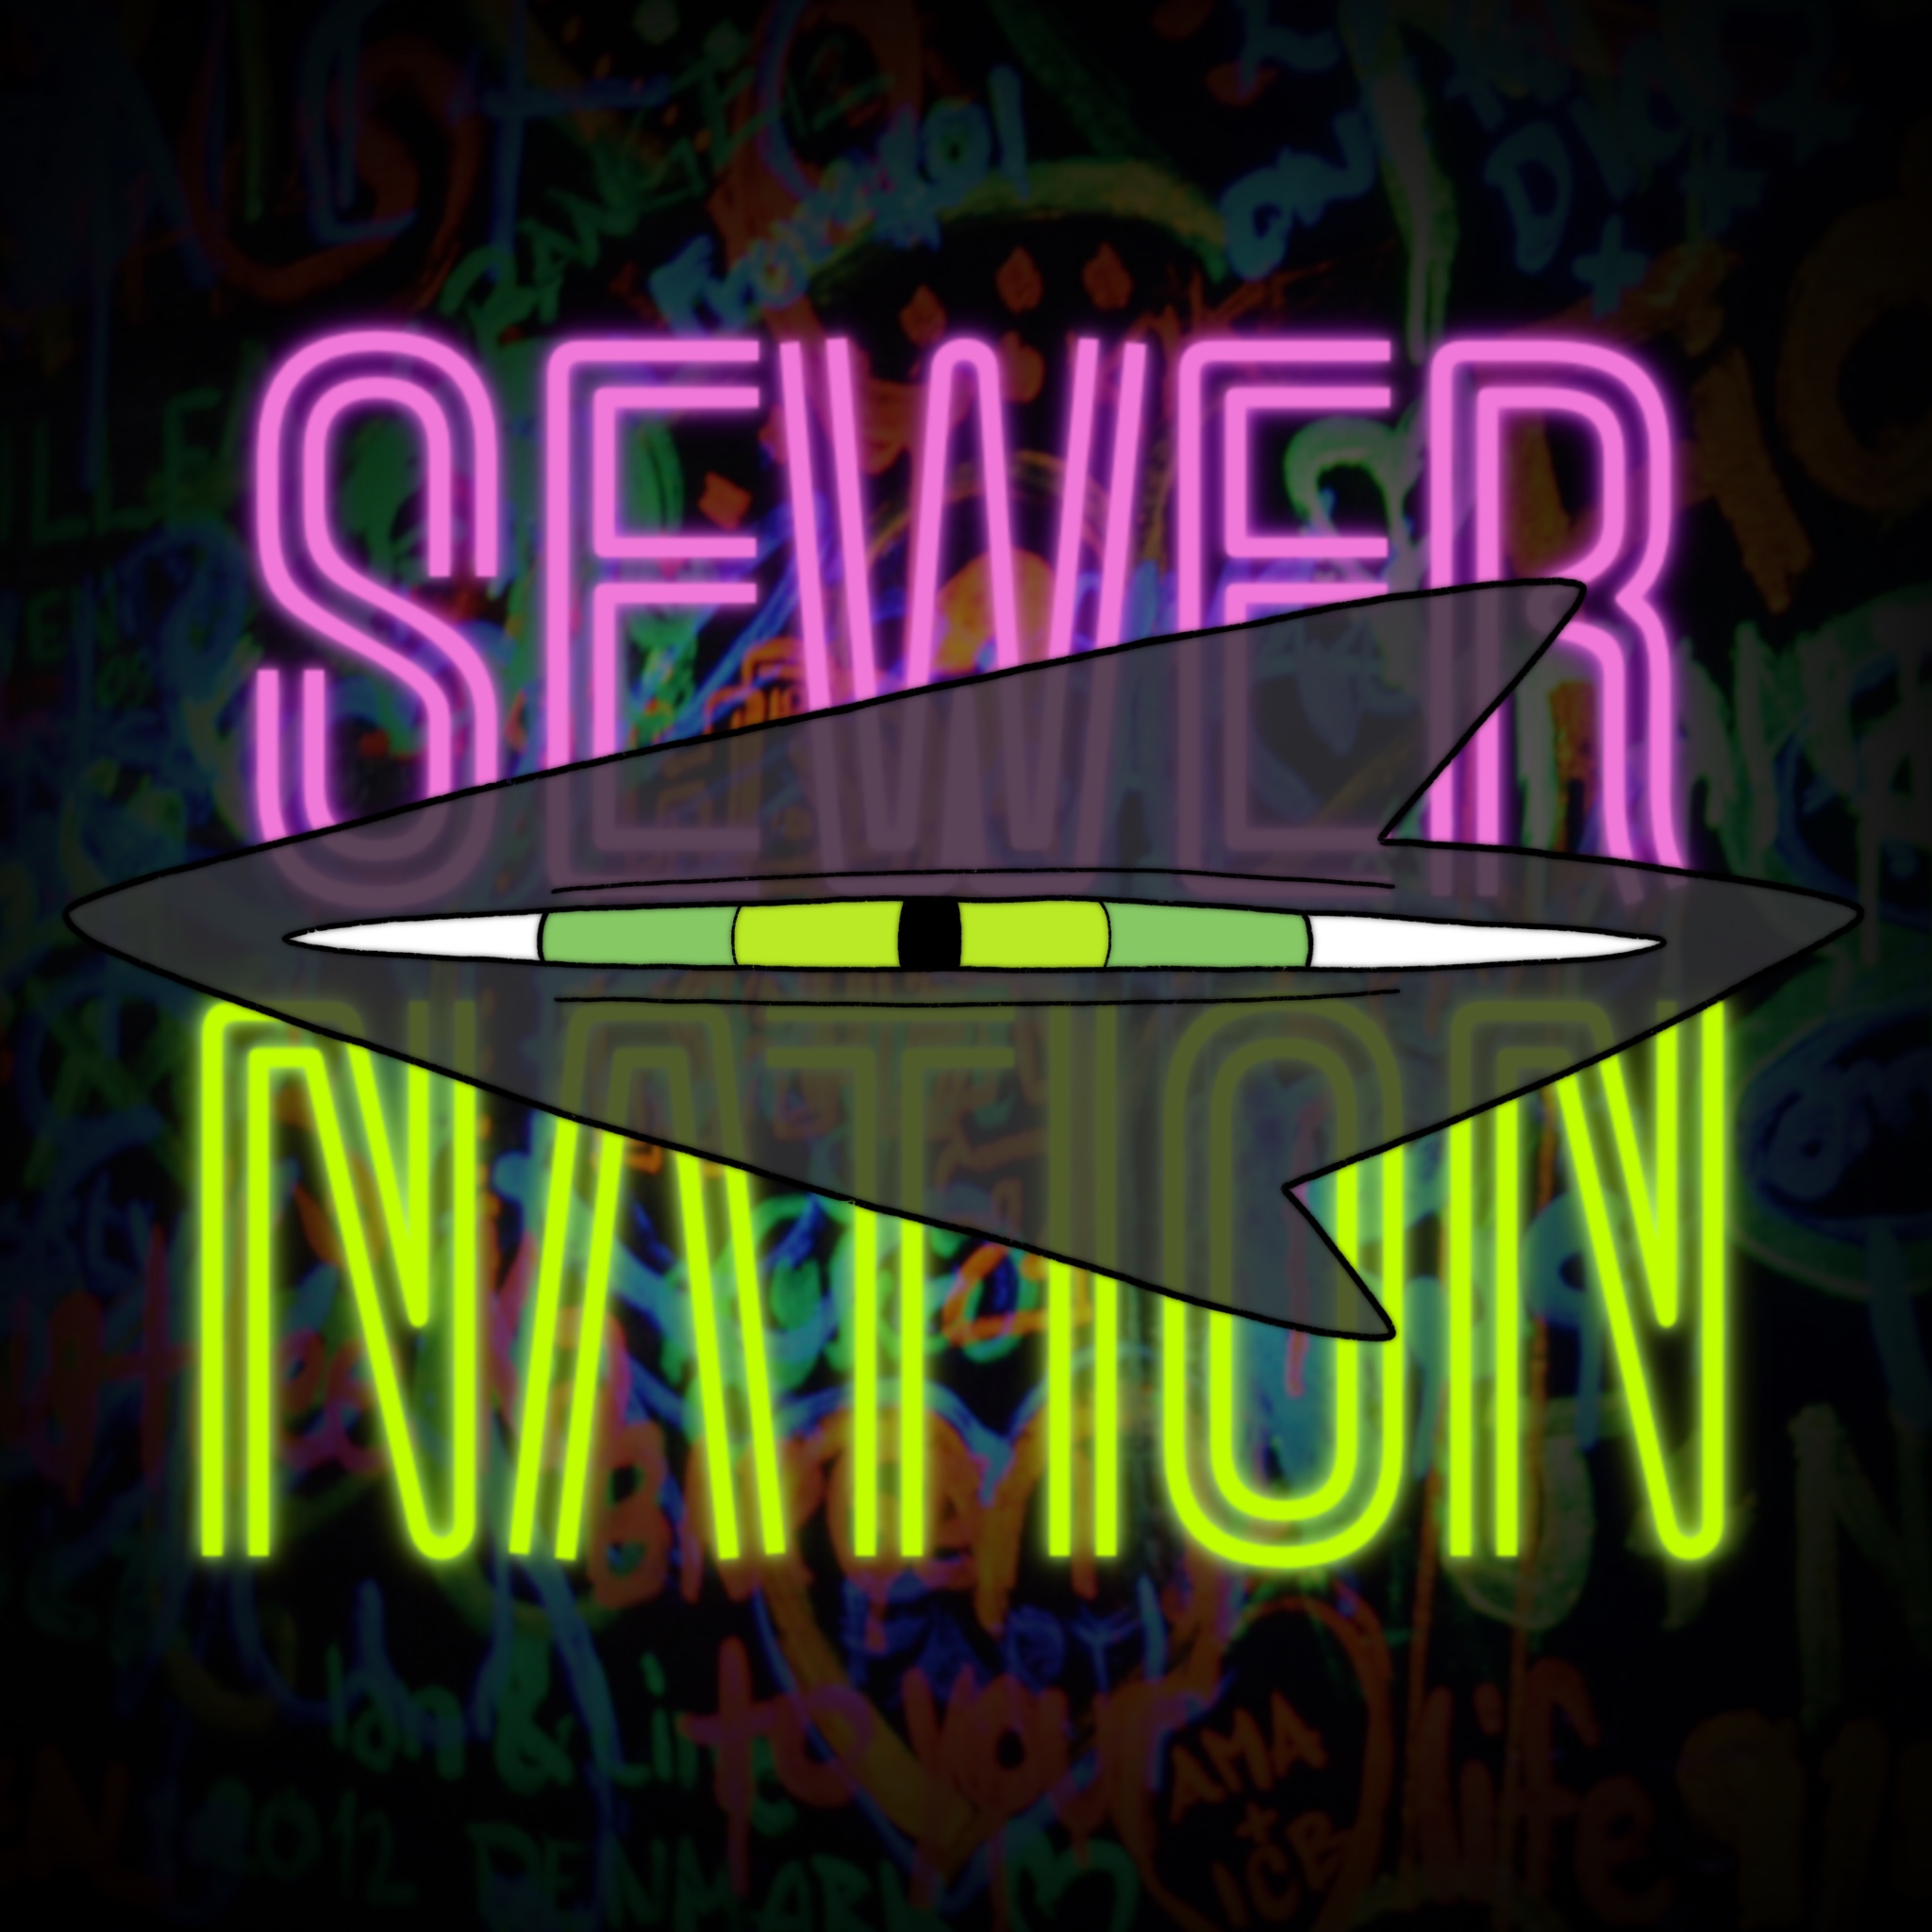 Sewer_Nation